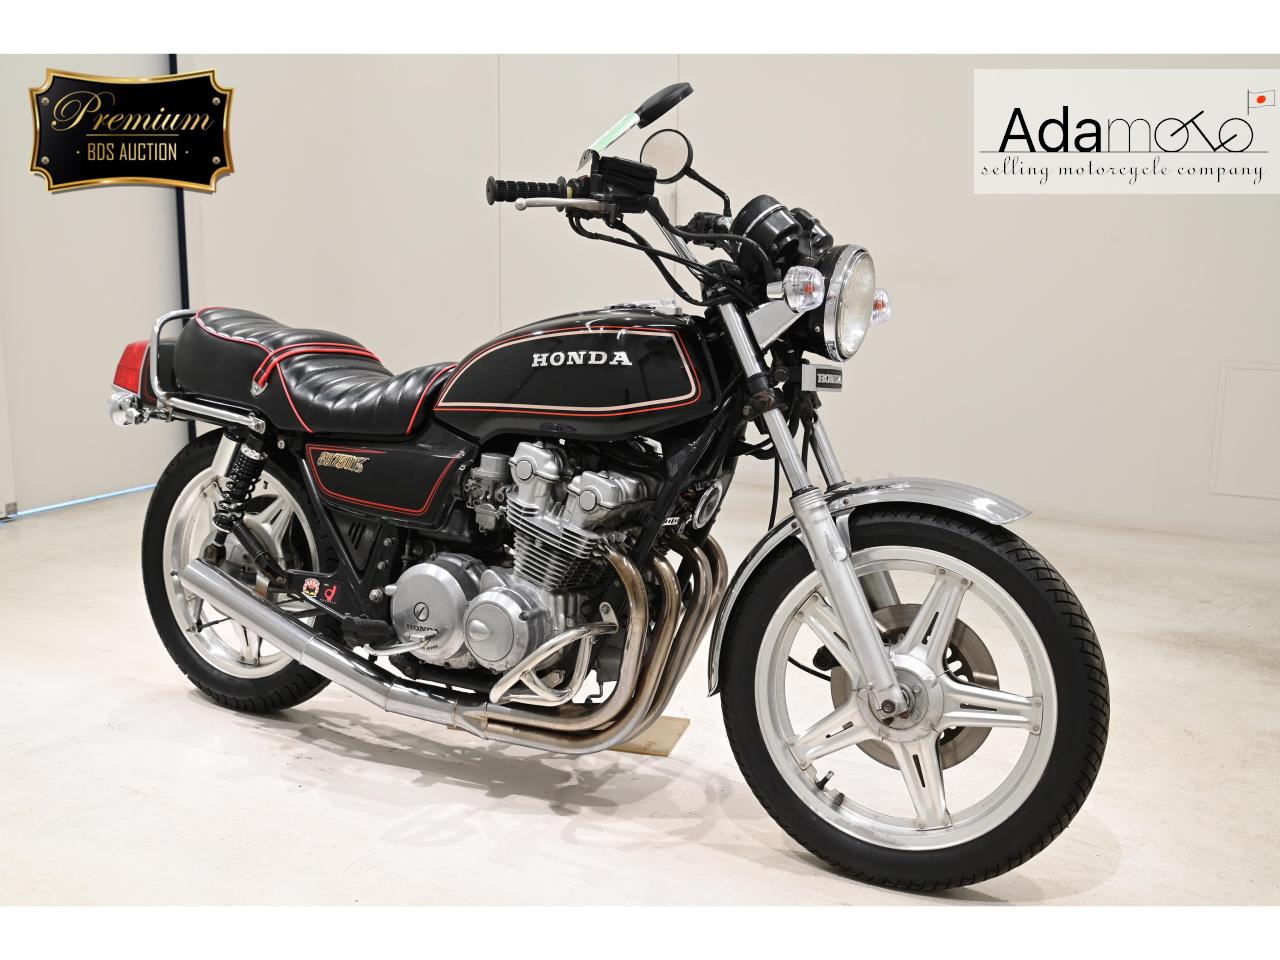 Honda CB750K - Adamoto - Motorcycles from Japan